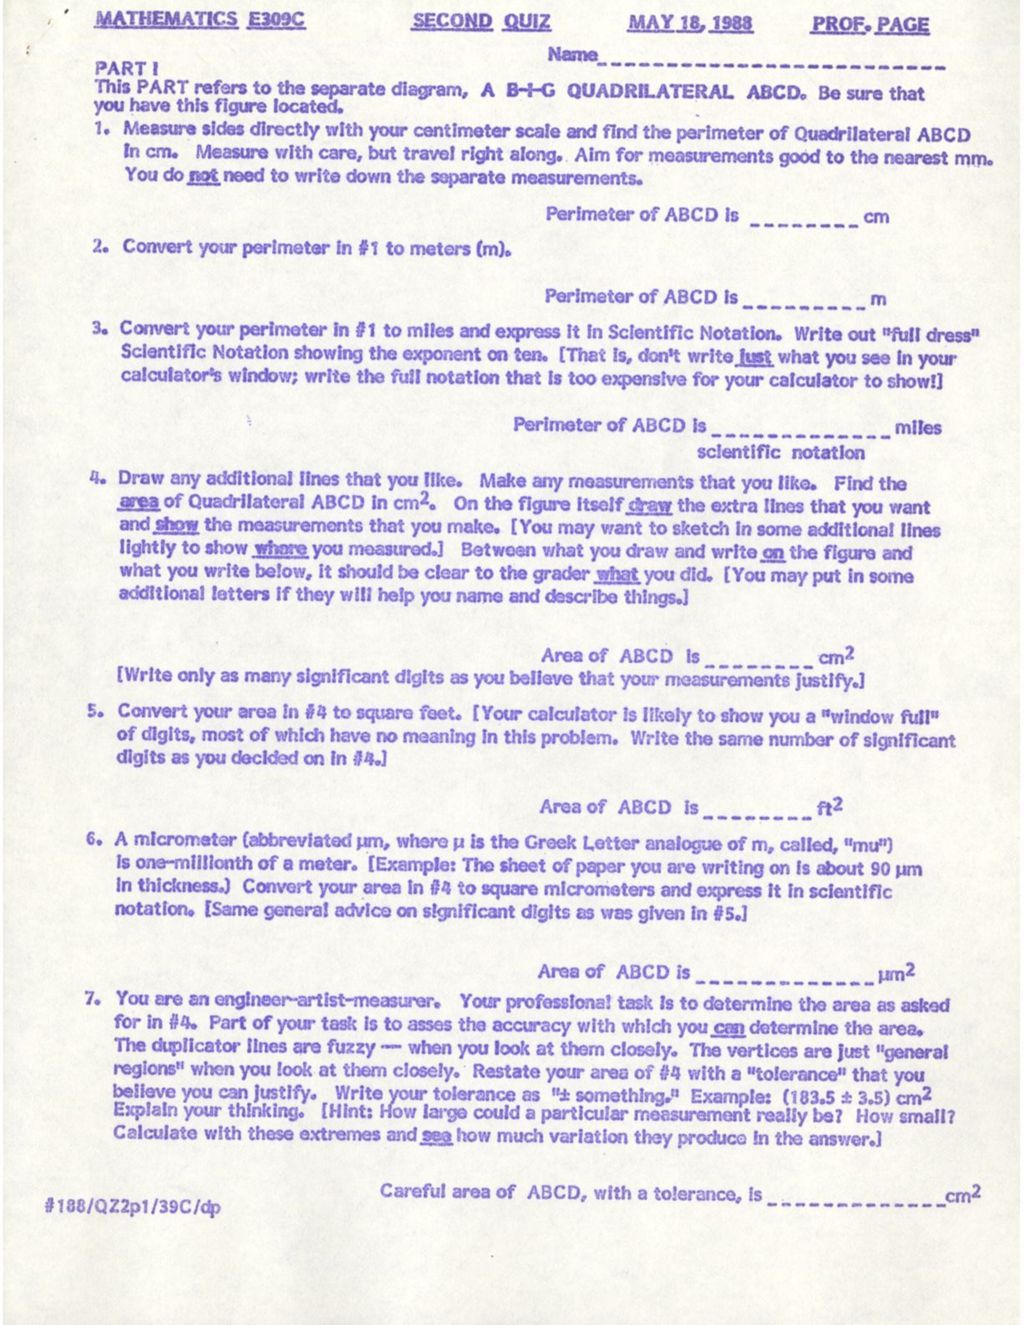 Math E309C Second Quiz (1988)